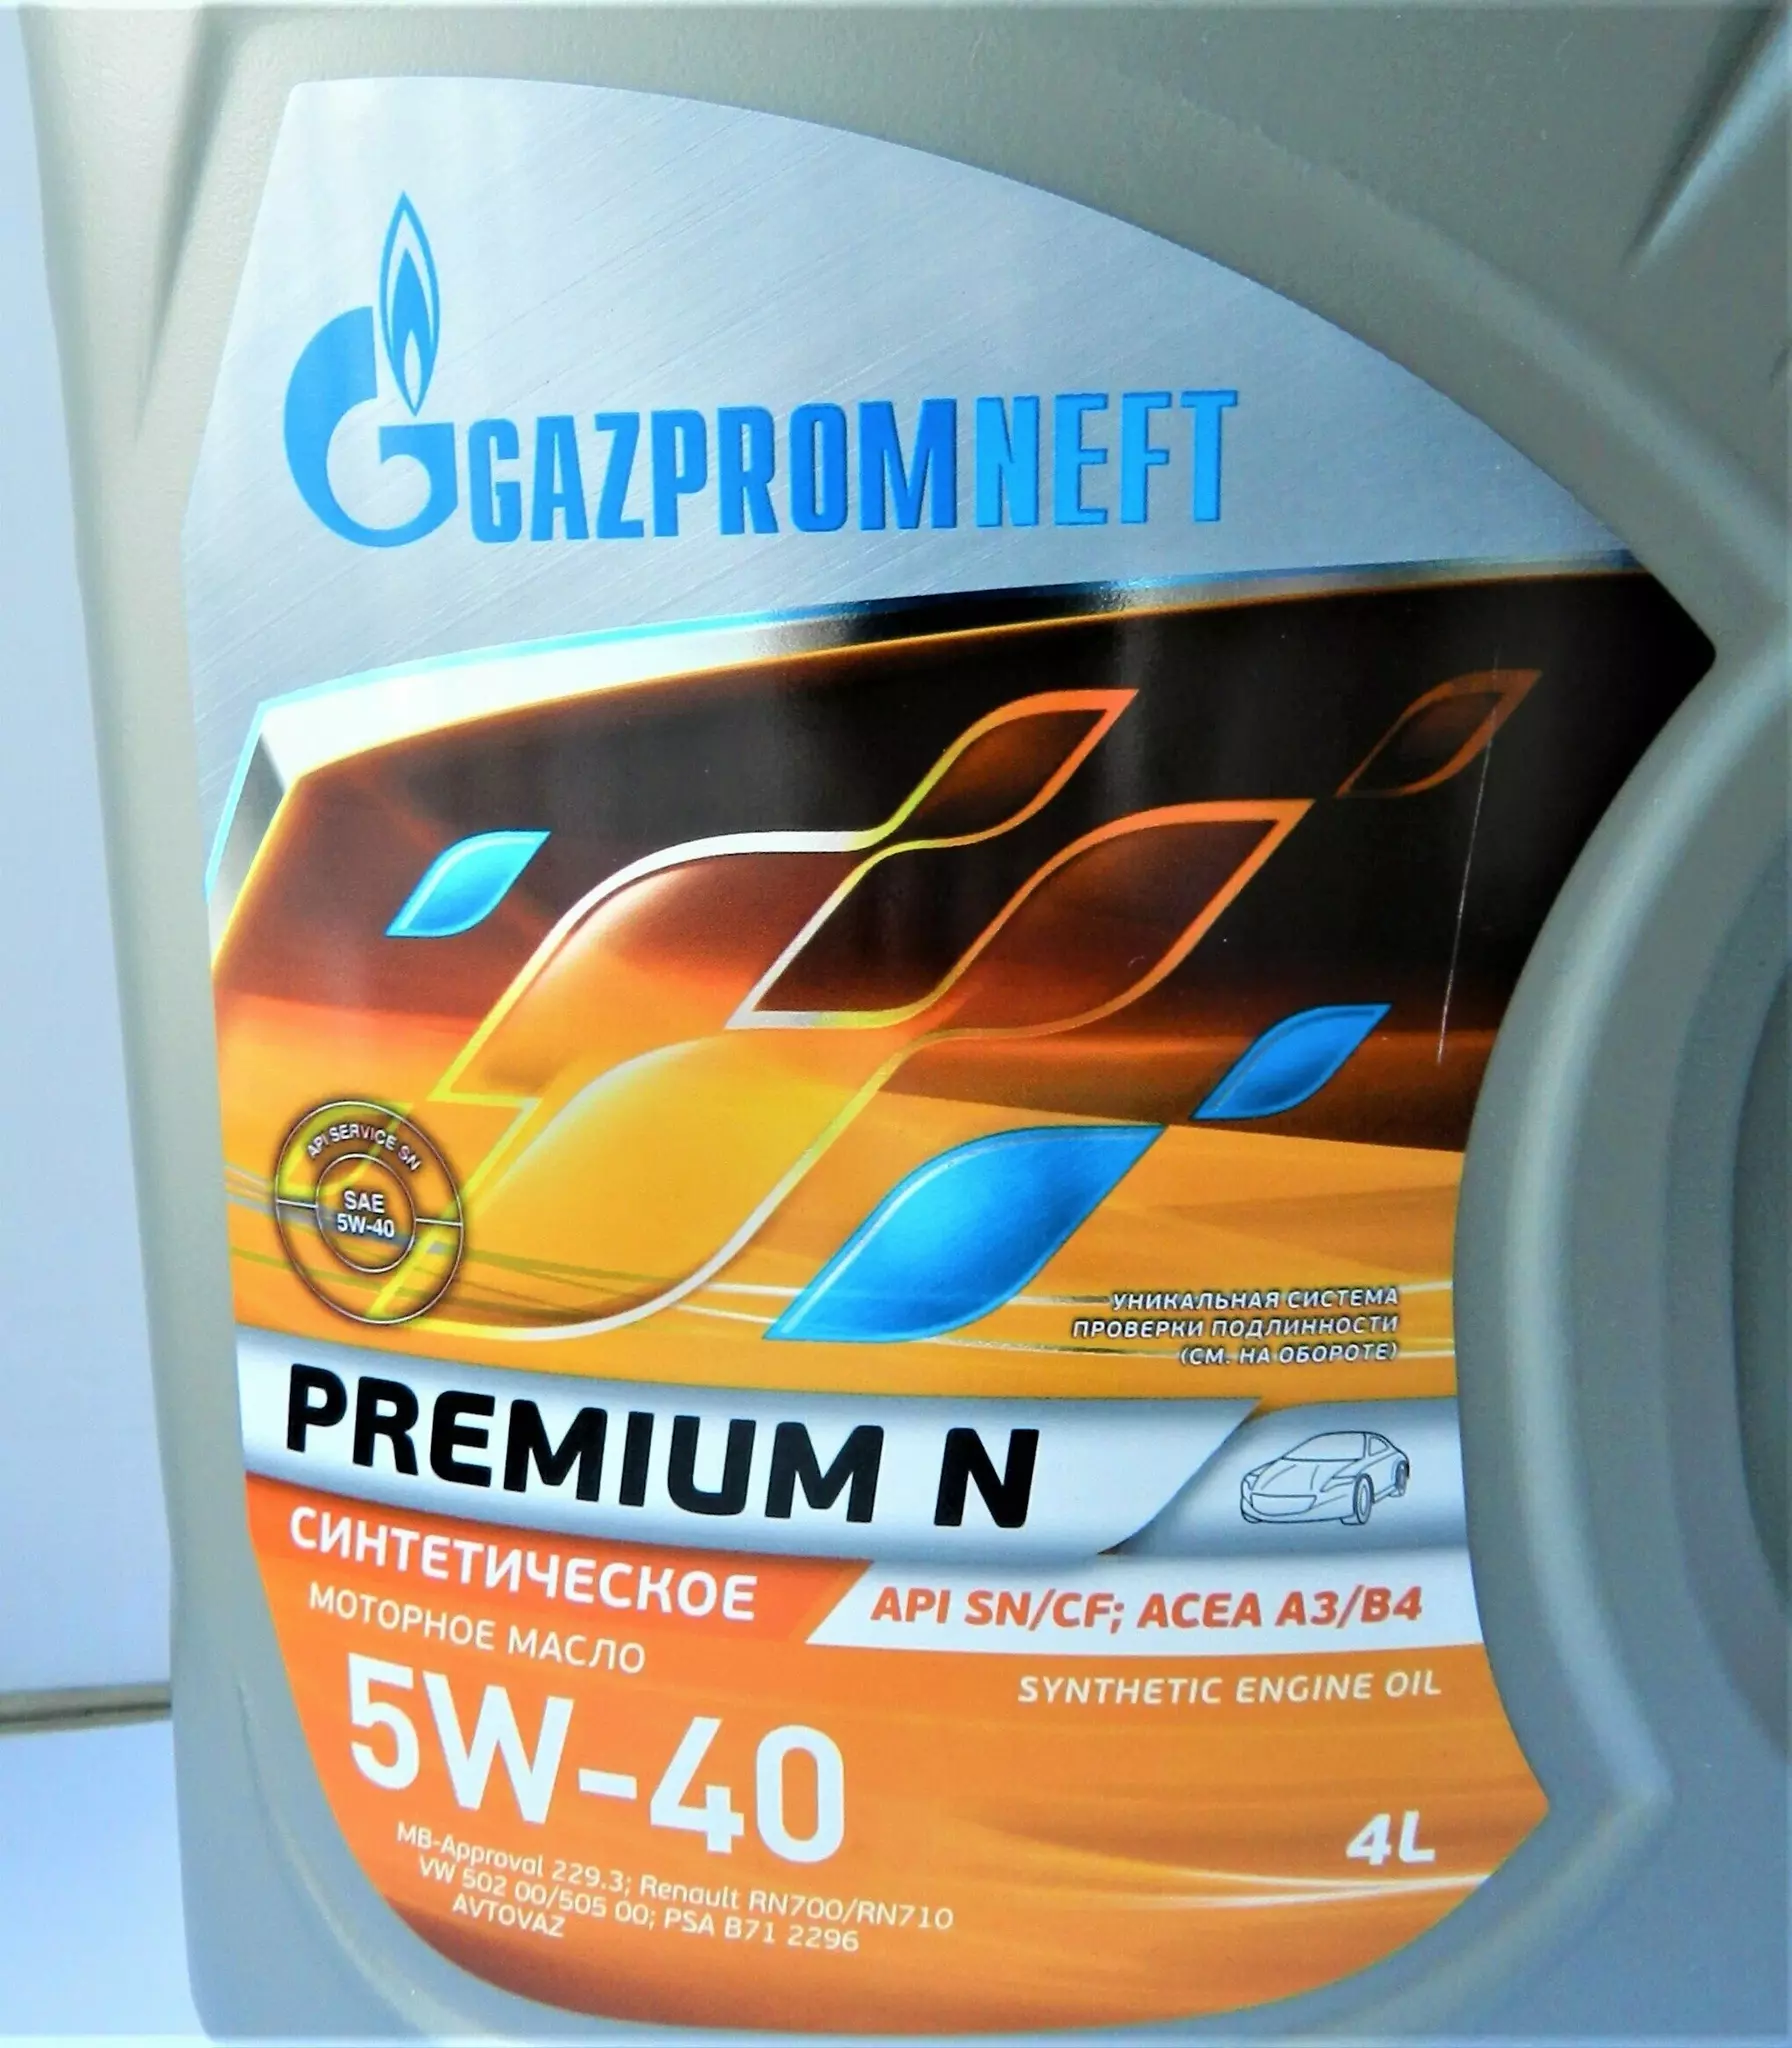 Масло газпромнефть premium n 5w40. Gazpromneft Premium n 5w-40. Premium n5w40 4л. Масло Premium n 5w-40 4л Gazpromneft. Gazpromneft масло Premium n 5w-40 4л ЕОМ номер.